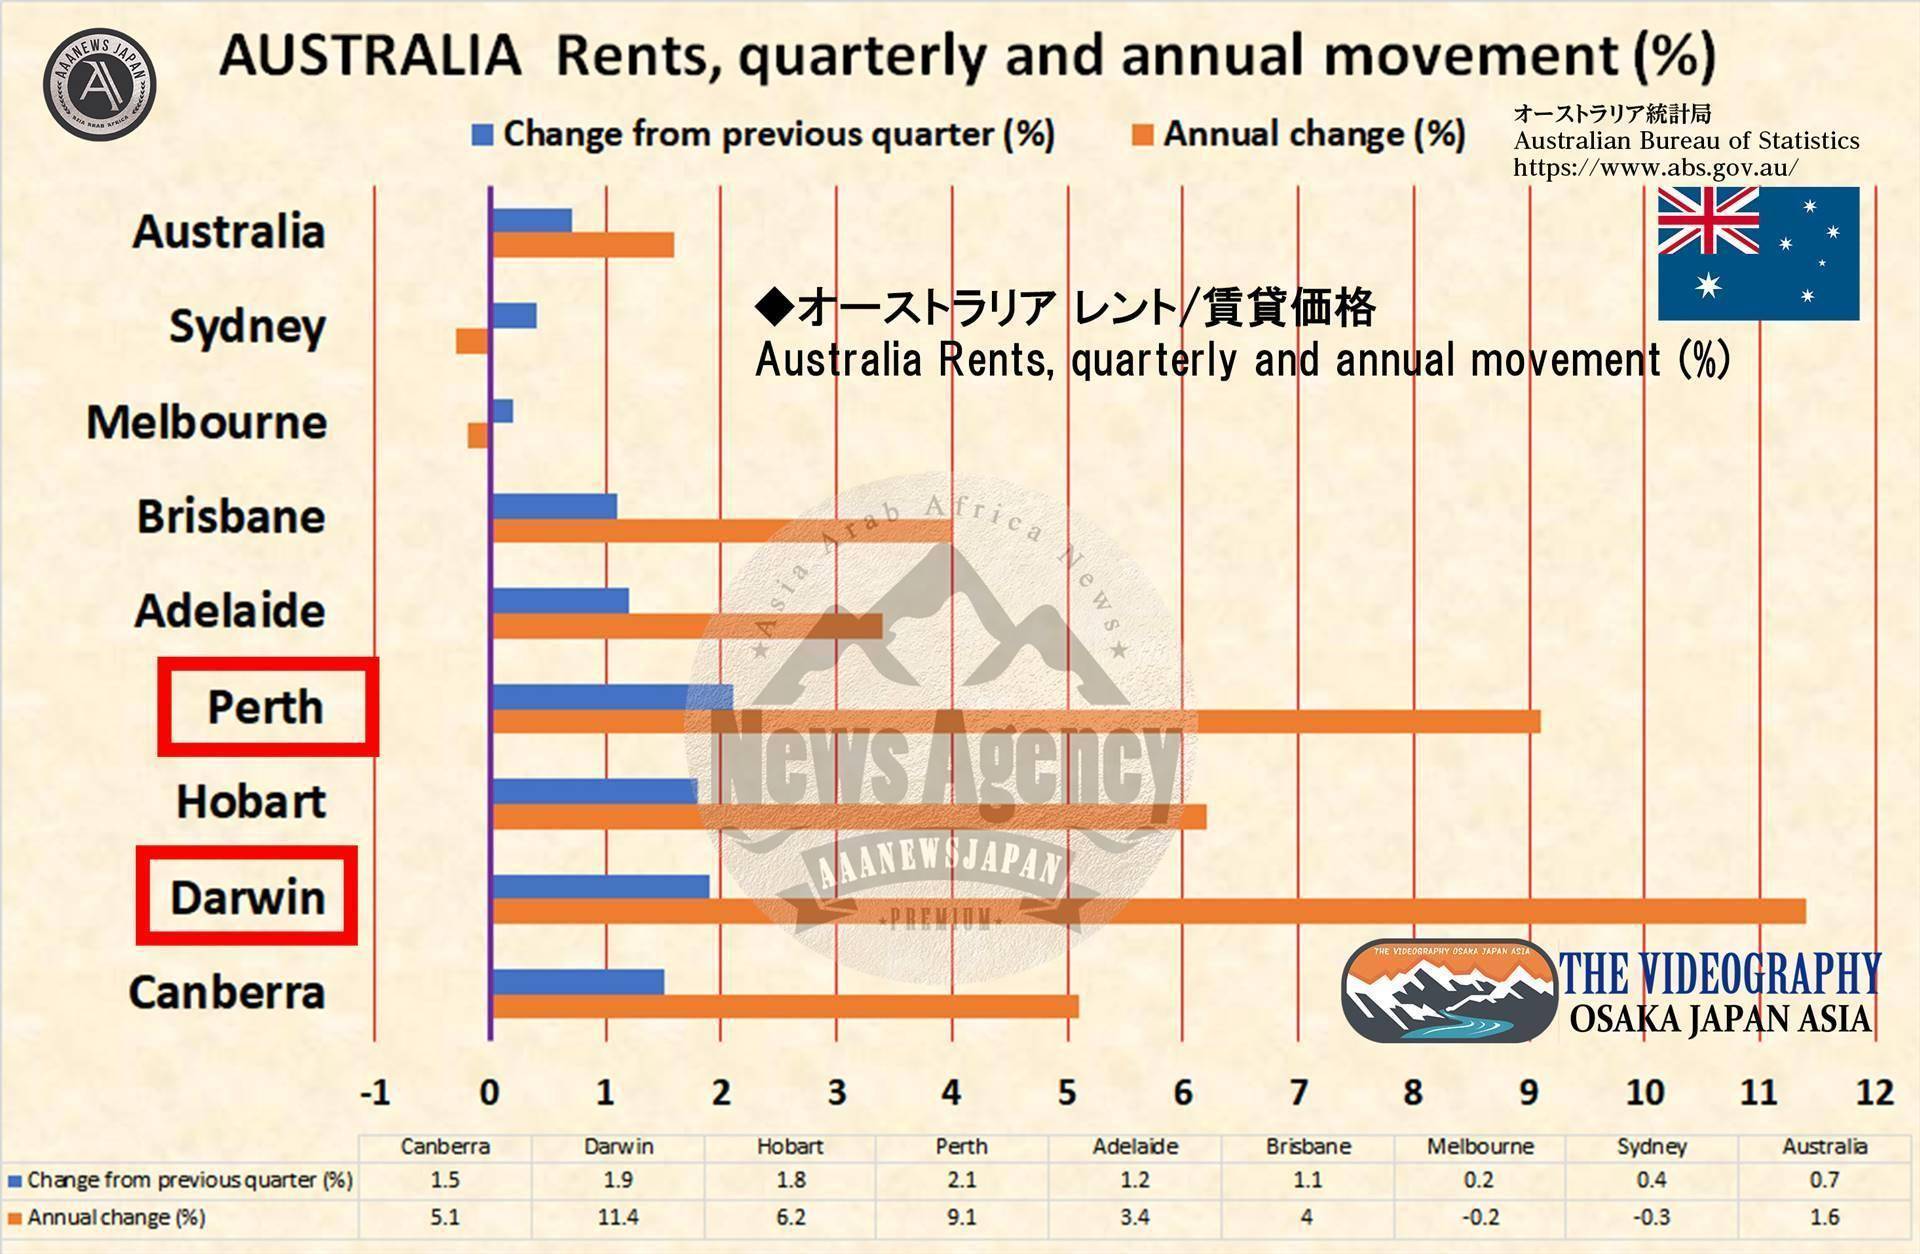 AU CPI 6.1%増 オーストラリア 消費者物価指数 CPI / Consumer Price Index. ◆オーストラリア レント/賃貸価格 Australia Rents, quarterly and annual movement (%) オーストラリア 賃貸価格 上昇・シドニーなど一部都市では上昇収束。 パース ダーウィンなど地方都市では上昇継続。 ※一時期 AUのレント/賃貸価格は下落しており 上昇＝回復・空室率は歴史的低水準。